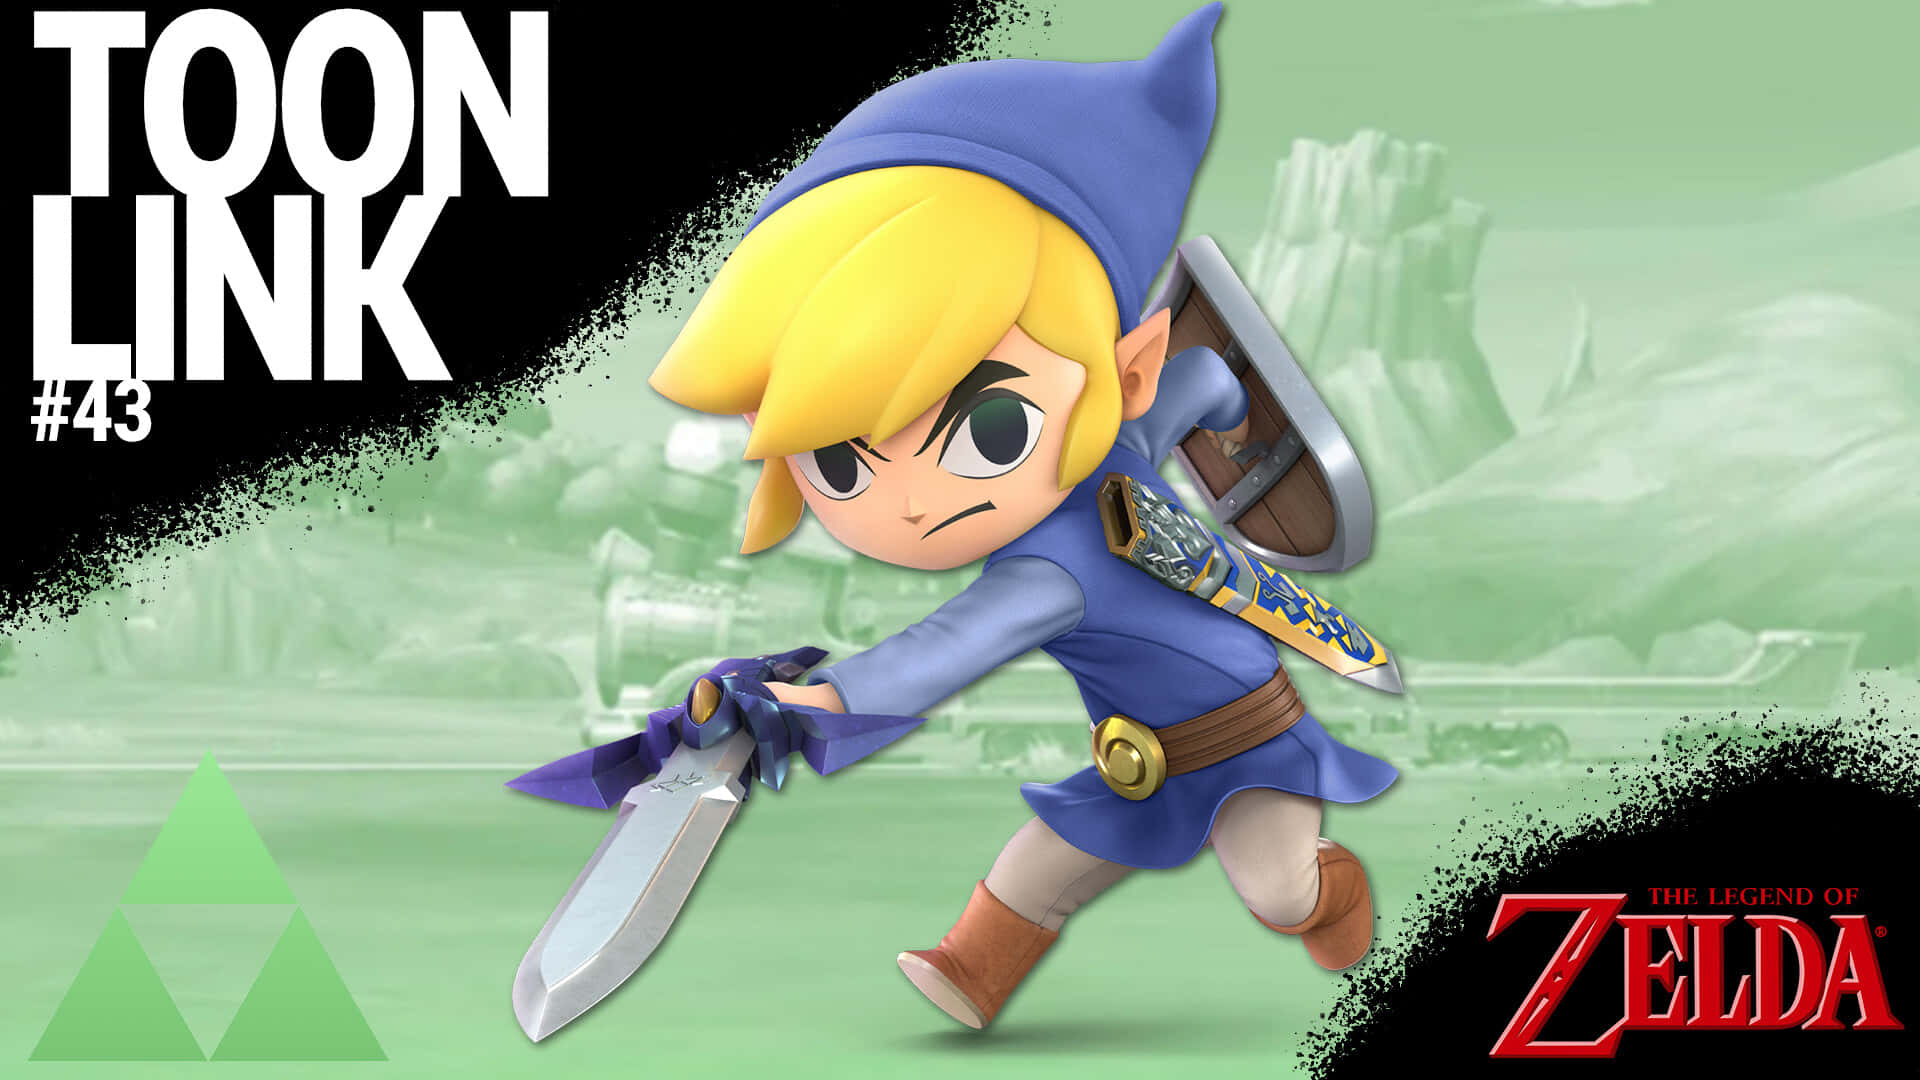 Toon Link From The Legend Of Zelda Background